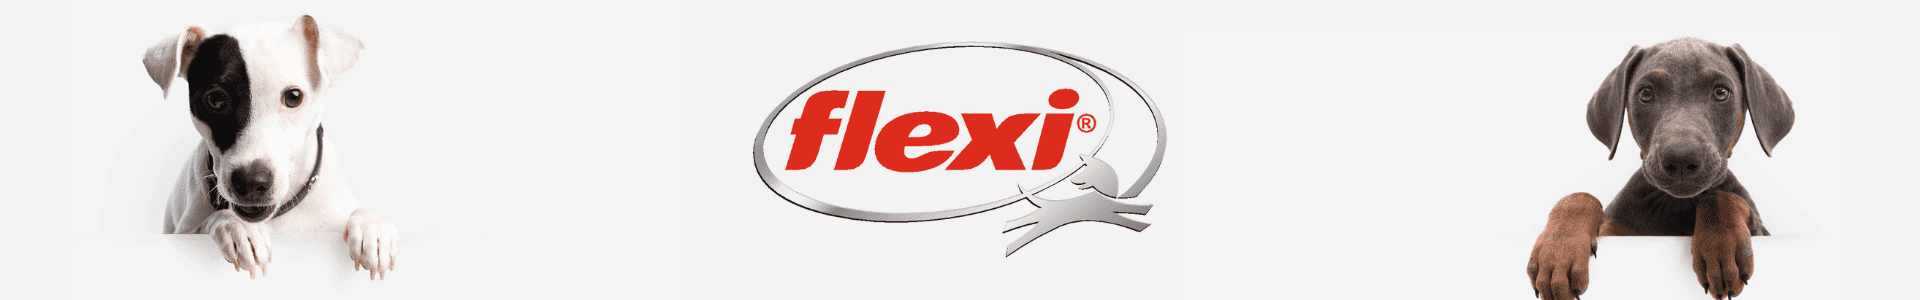 flexipet-brand